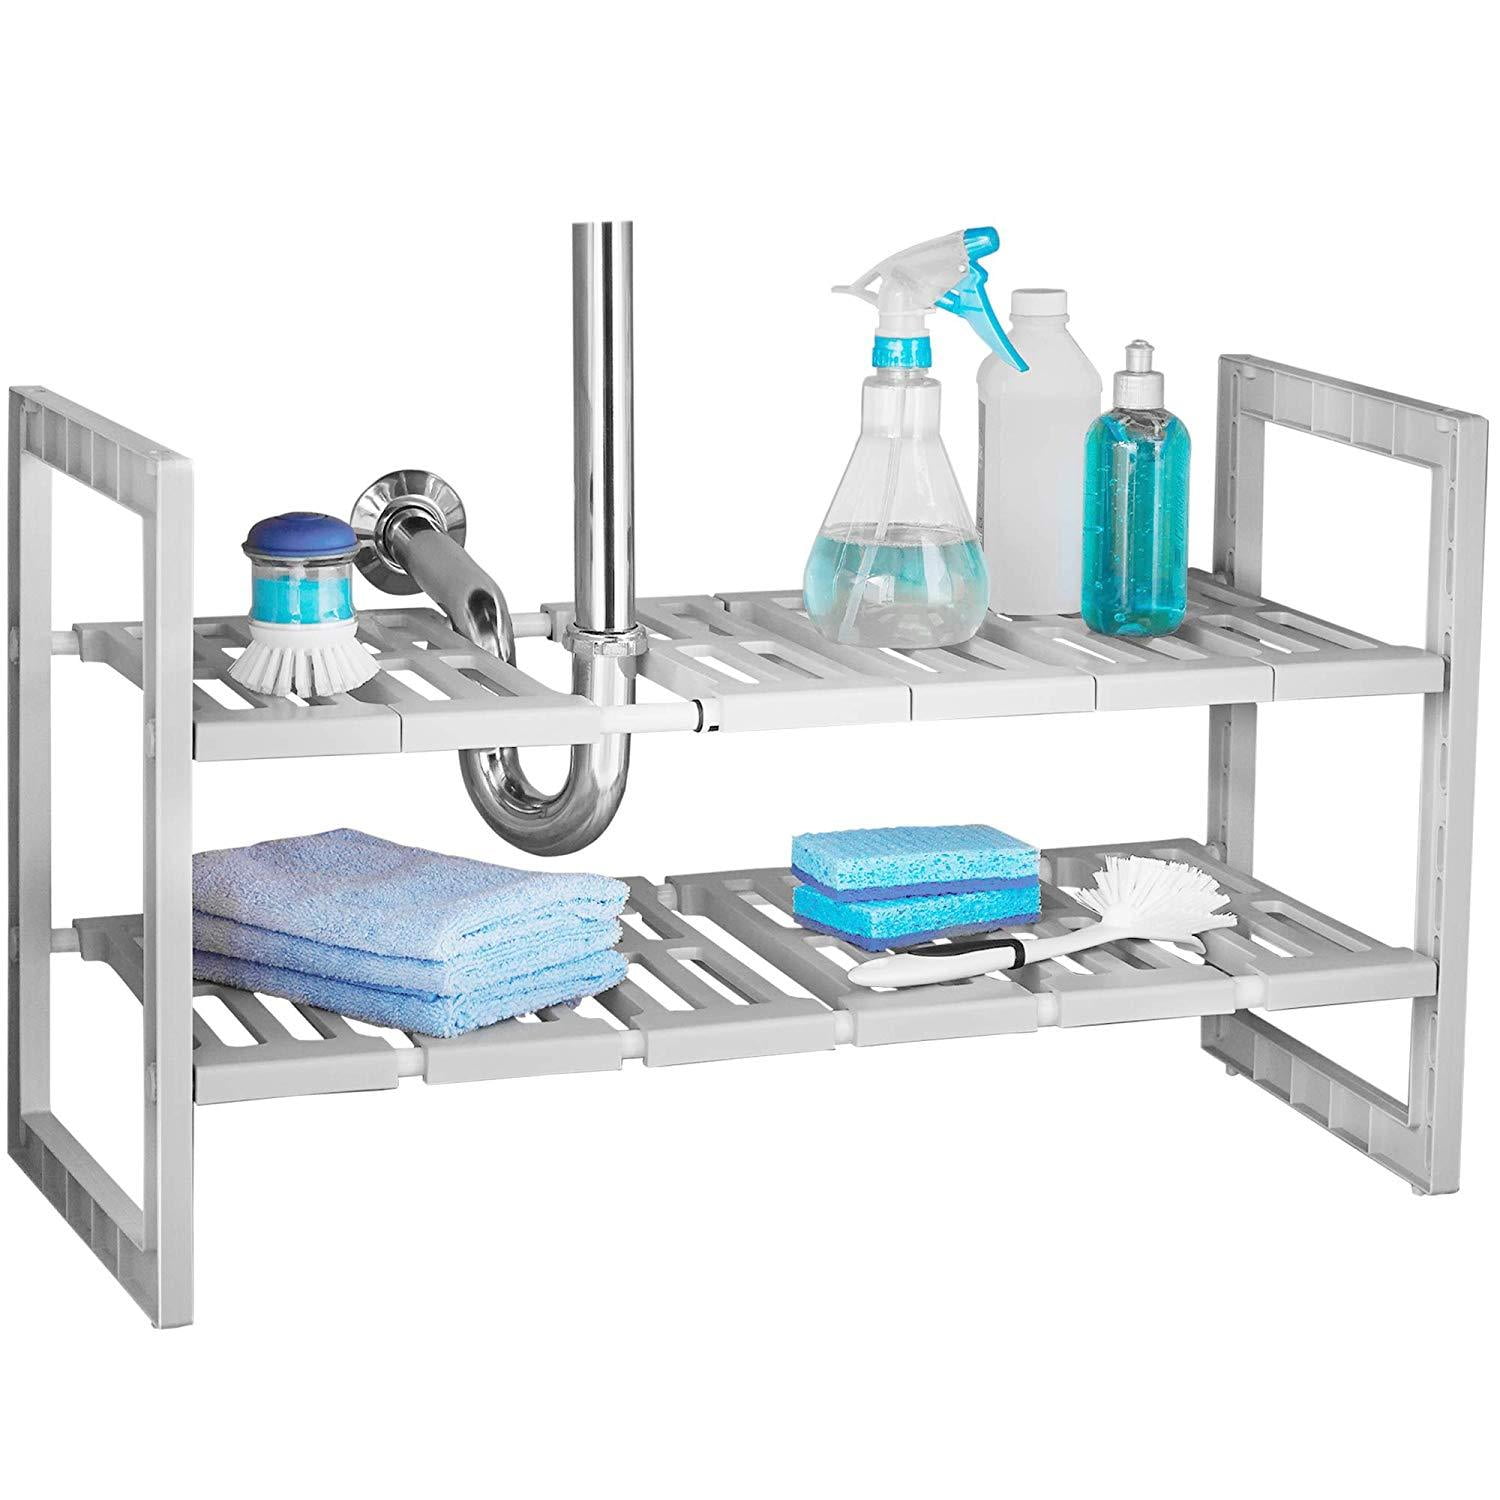 StoreSmith Expandable Under Sink Organizer - Blue